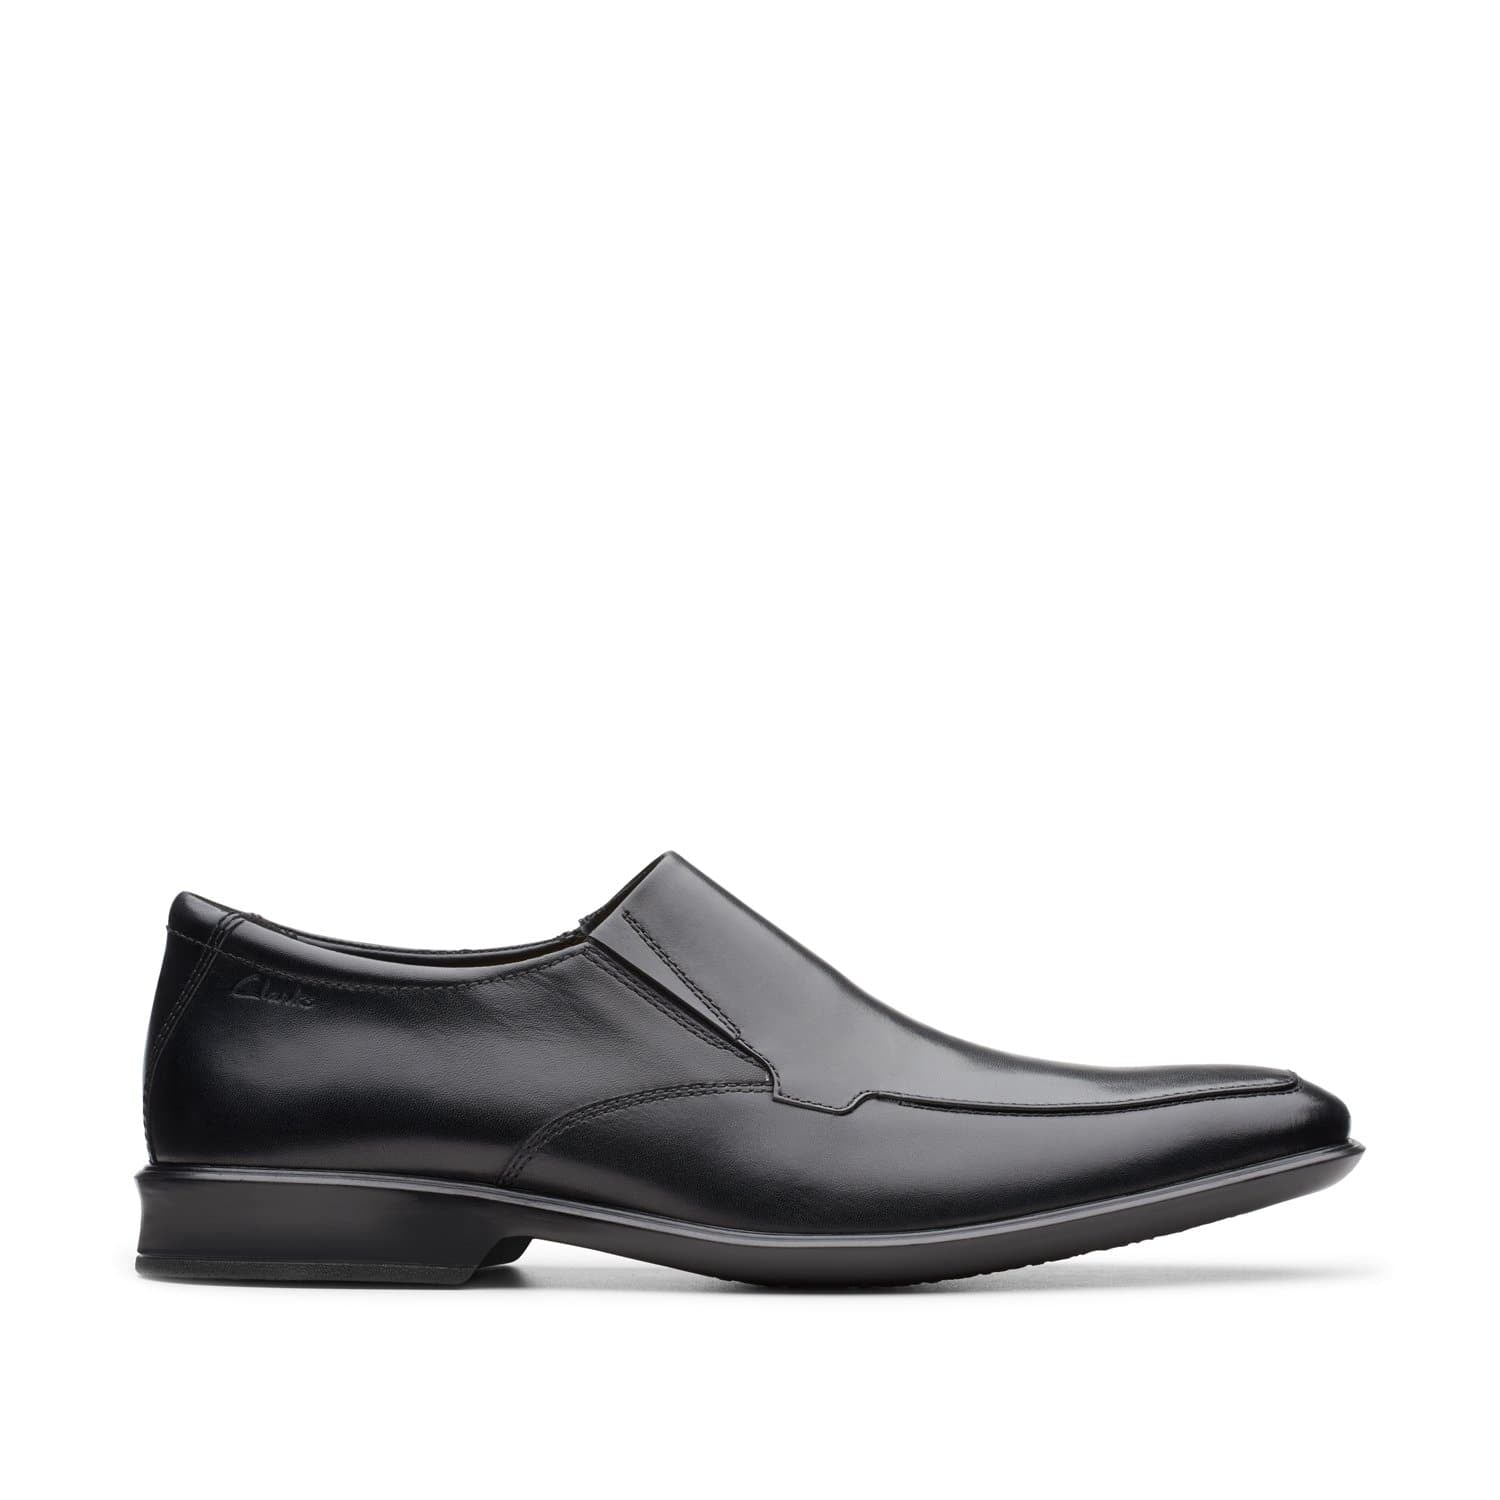 Clarks-Bensley-Step-Men's-Shoes-Black-Leather-26147686